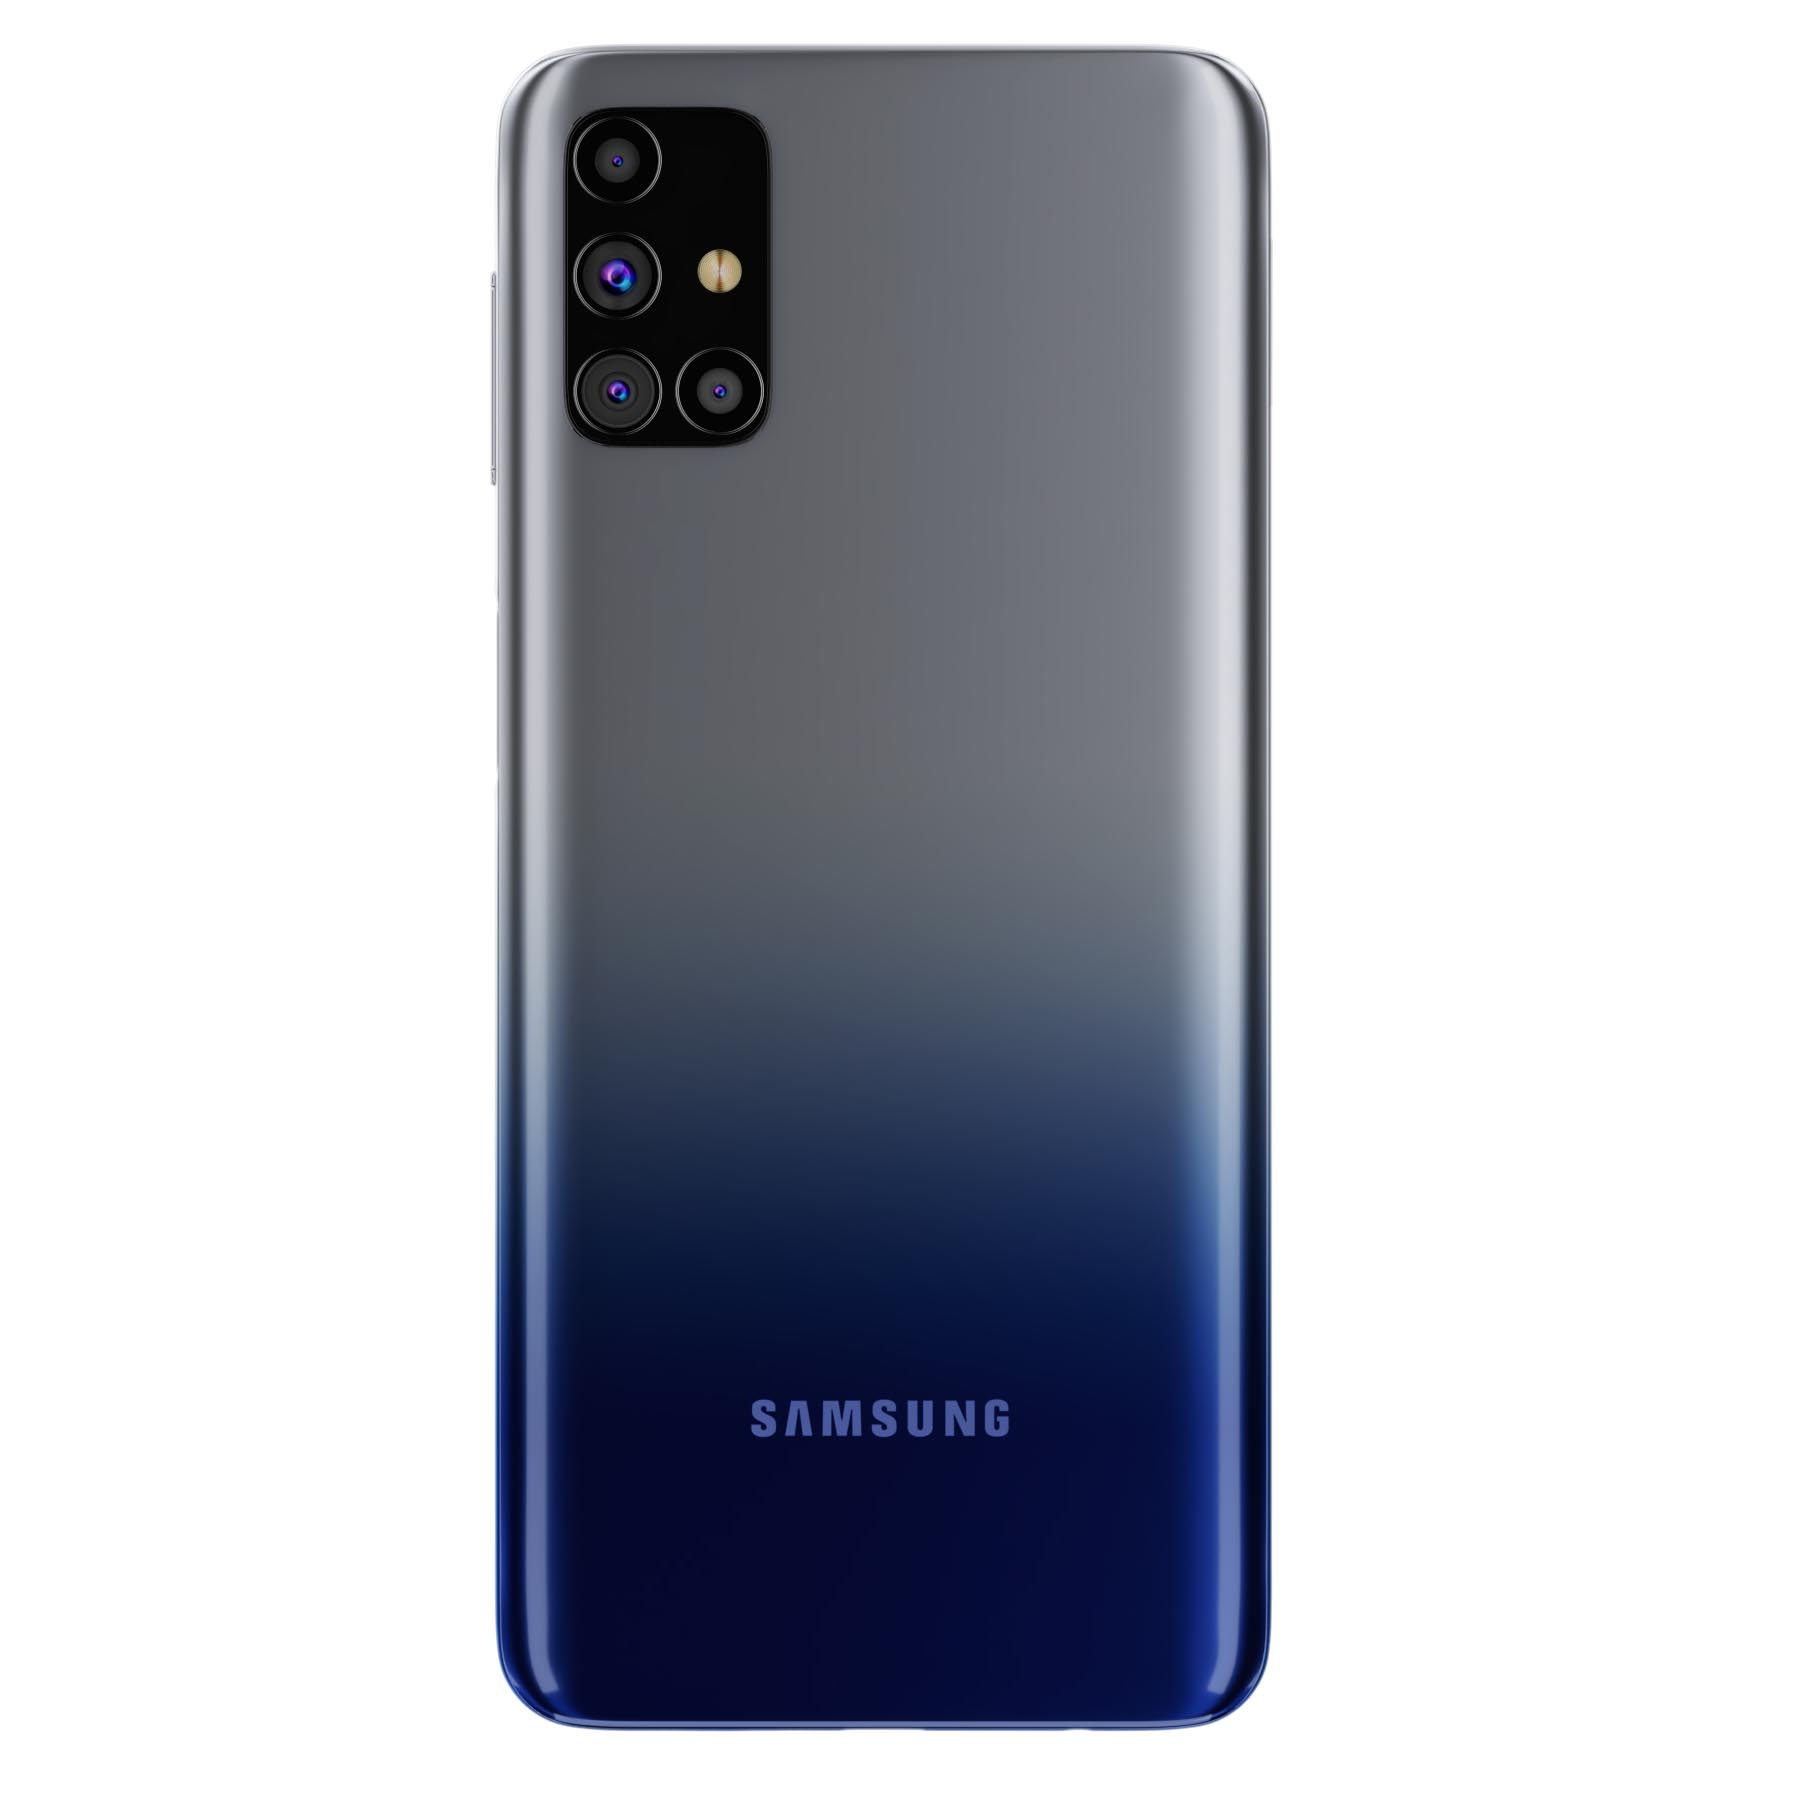 Samsung m31 128gb. Samsung Galaxy m31 6/128 GB. Samsung m31s 128gb. Samsung Galaxy m31s 6/128gb. Samsung Galaxy m31s 128gb Black.